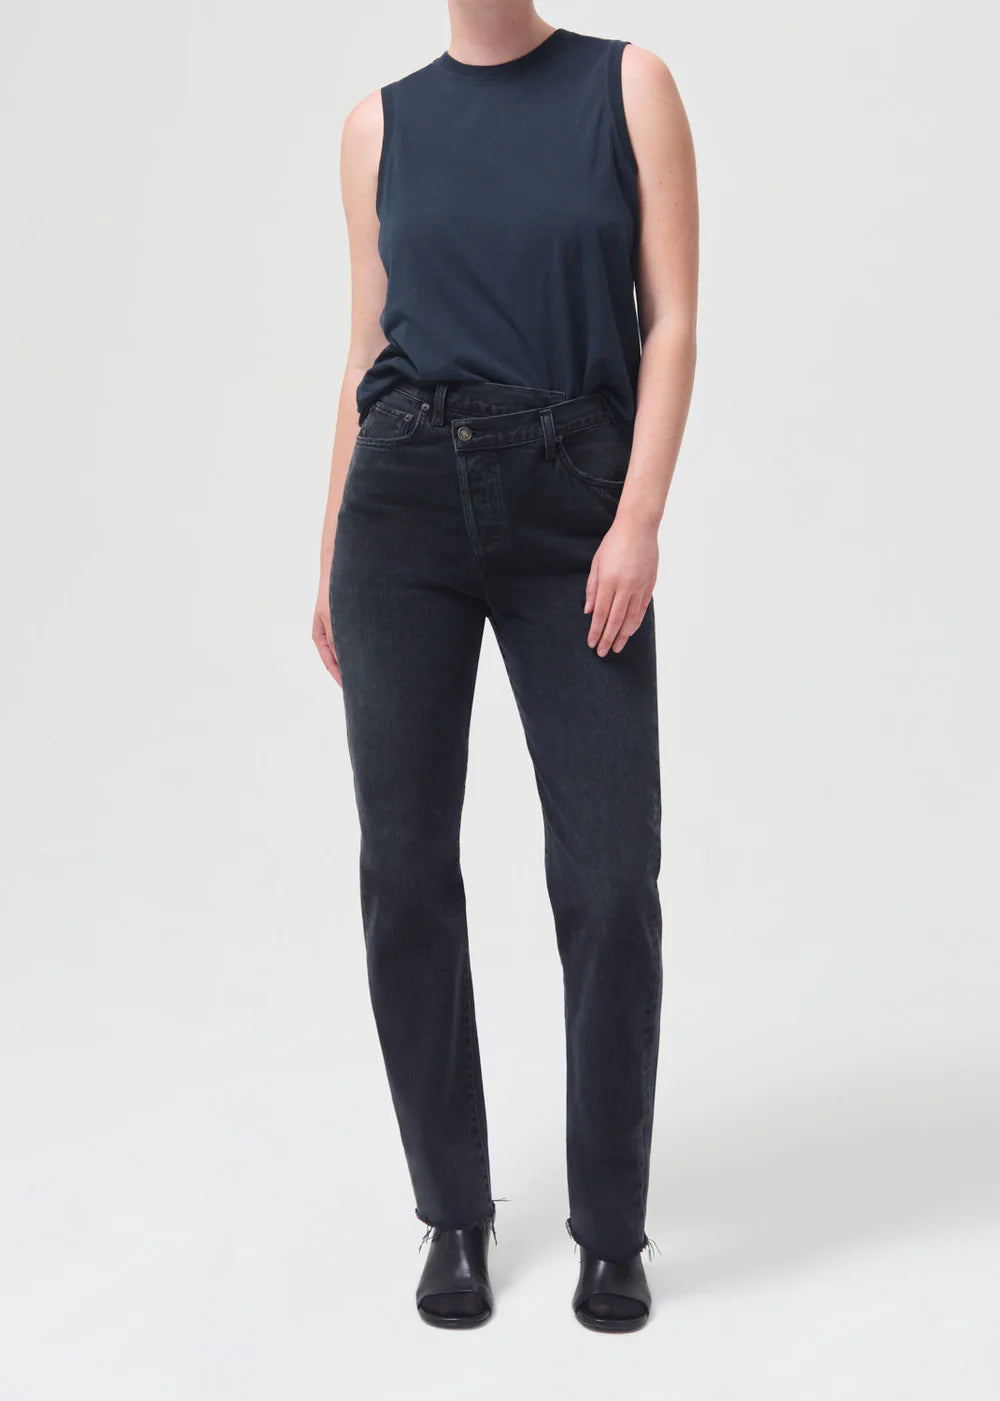 Criss Cross Straight Jeans in Black - Via Store